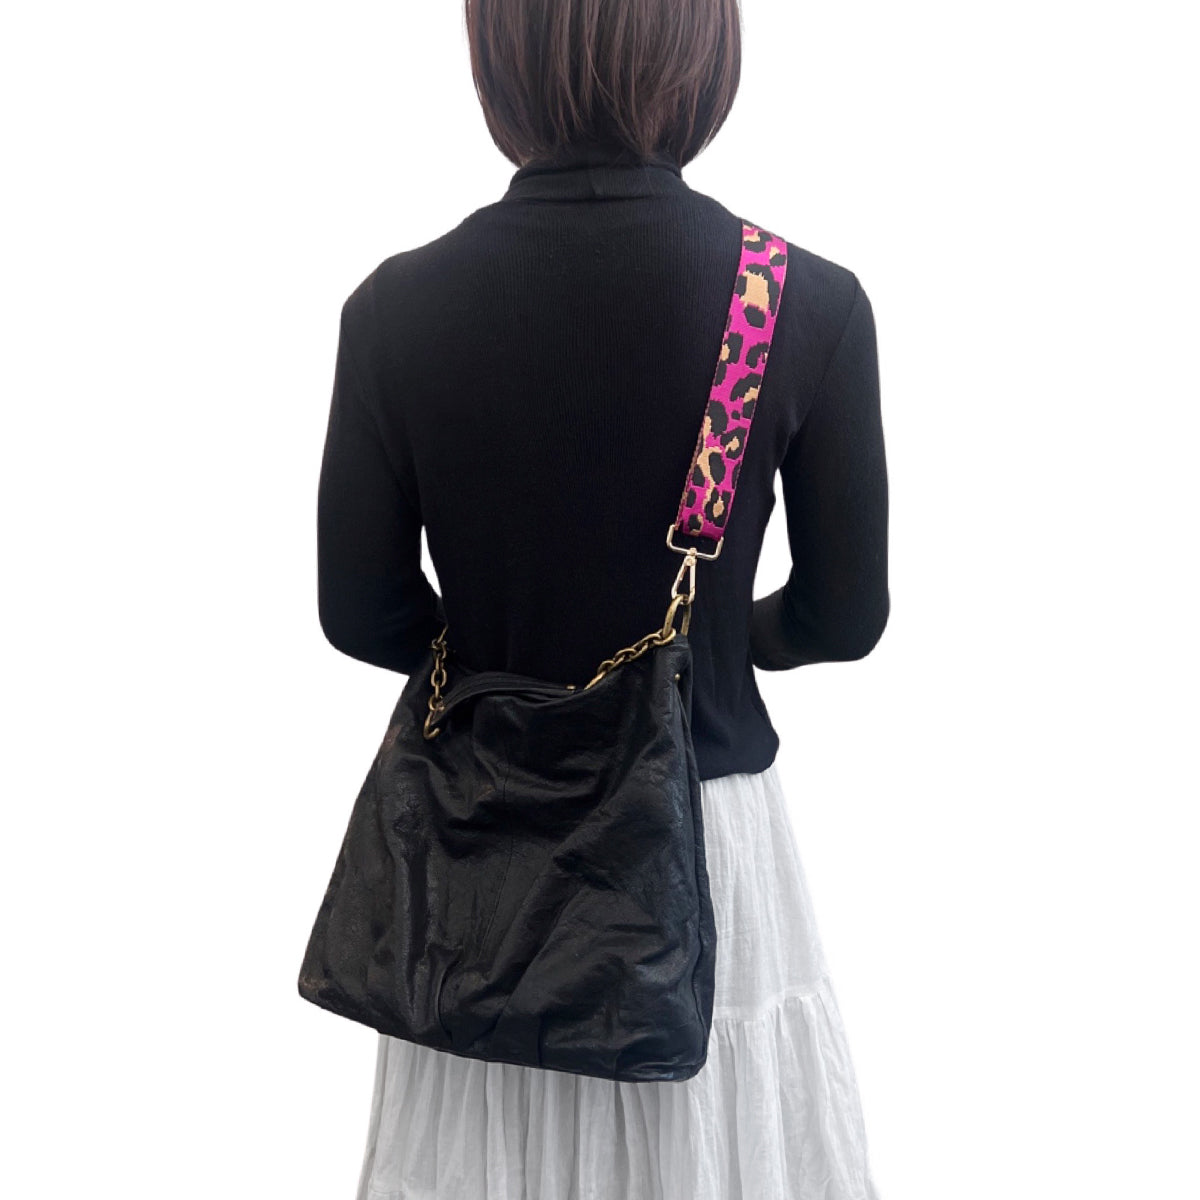 Adjustable Crossbody Bag Nylon Wide Handbag Straps Bag Belt Purse